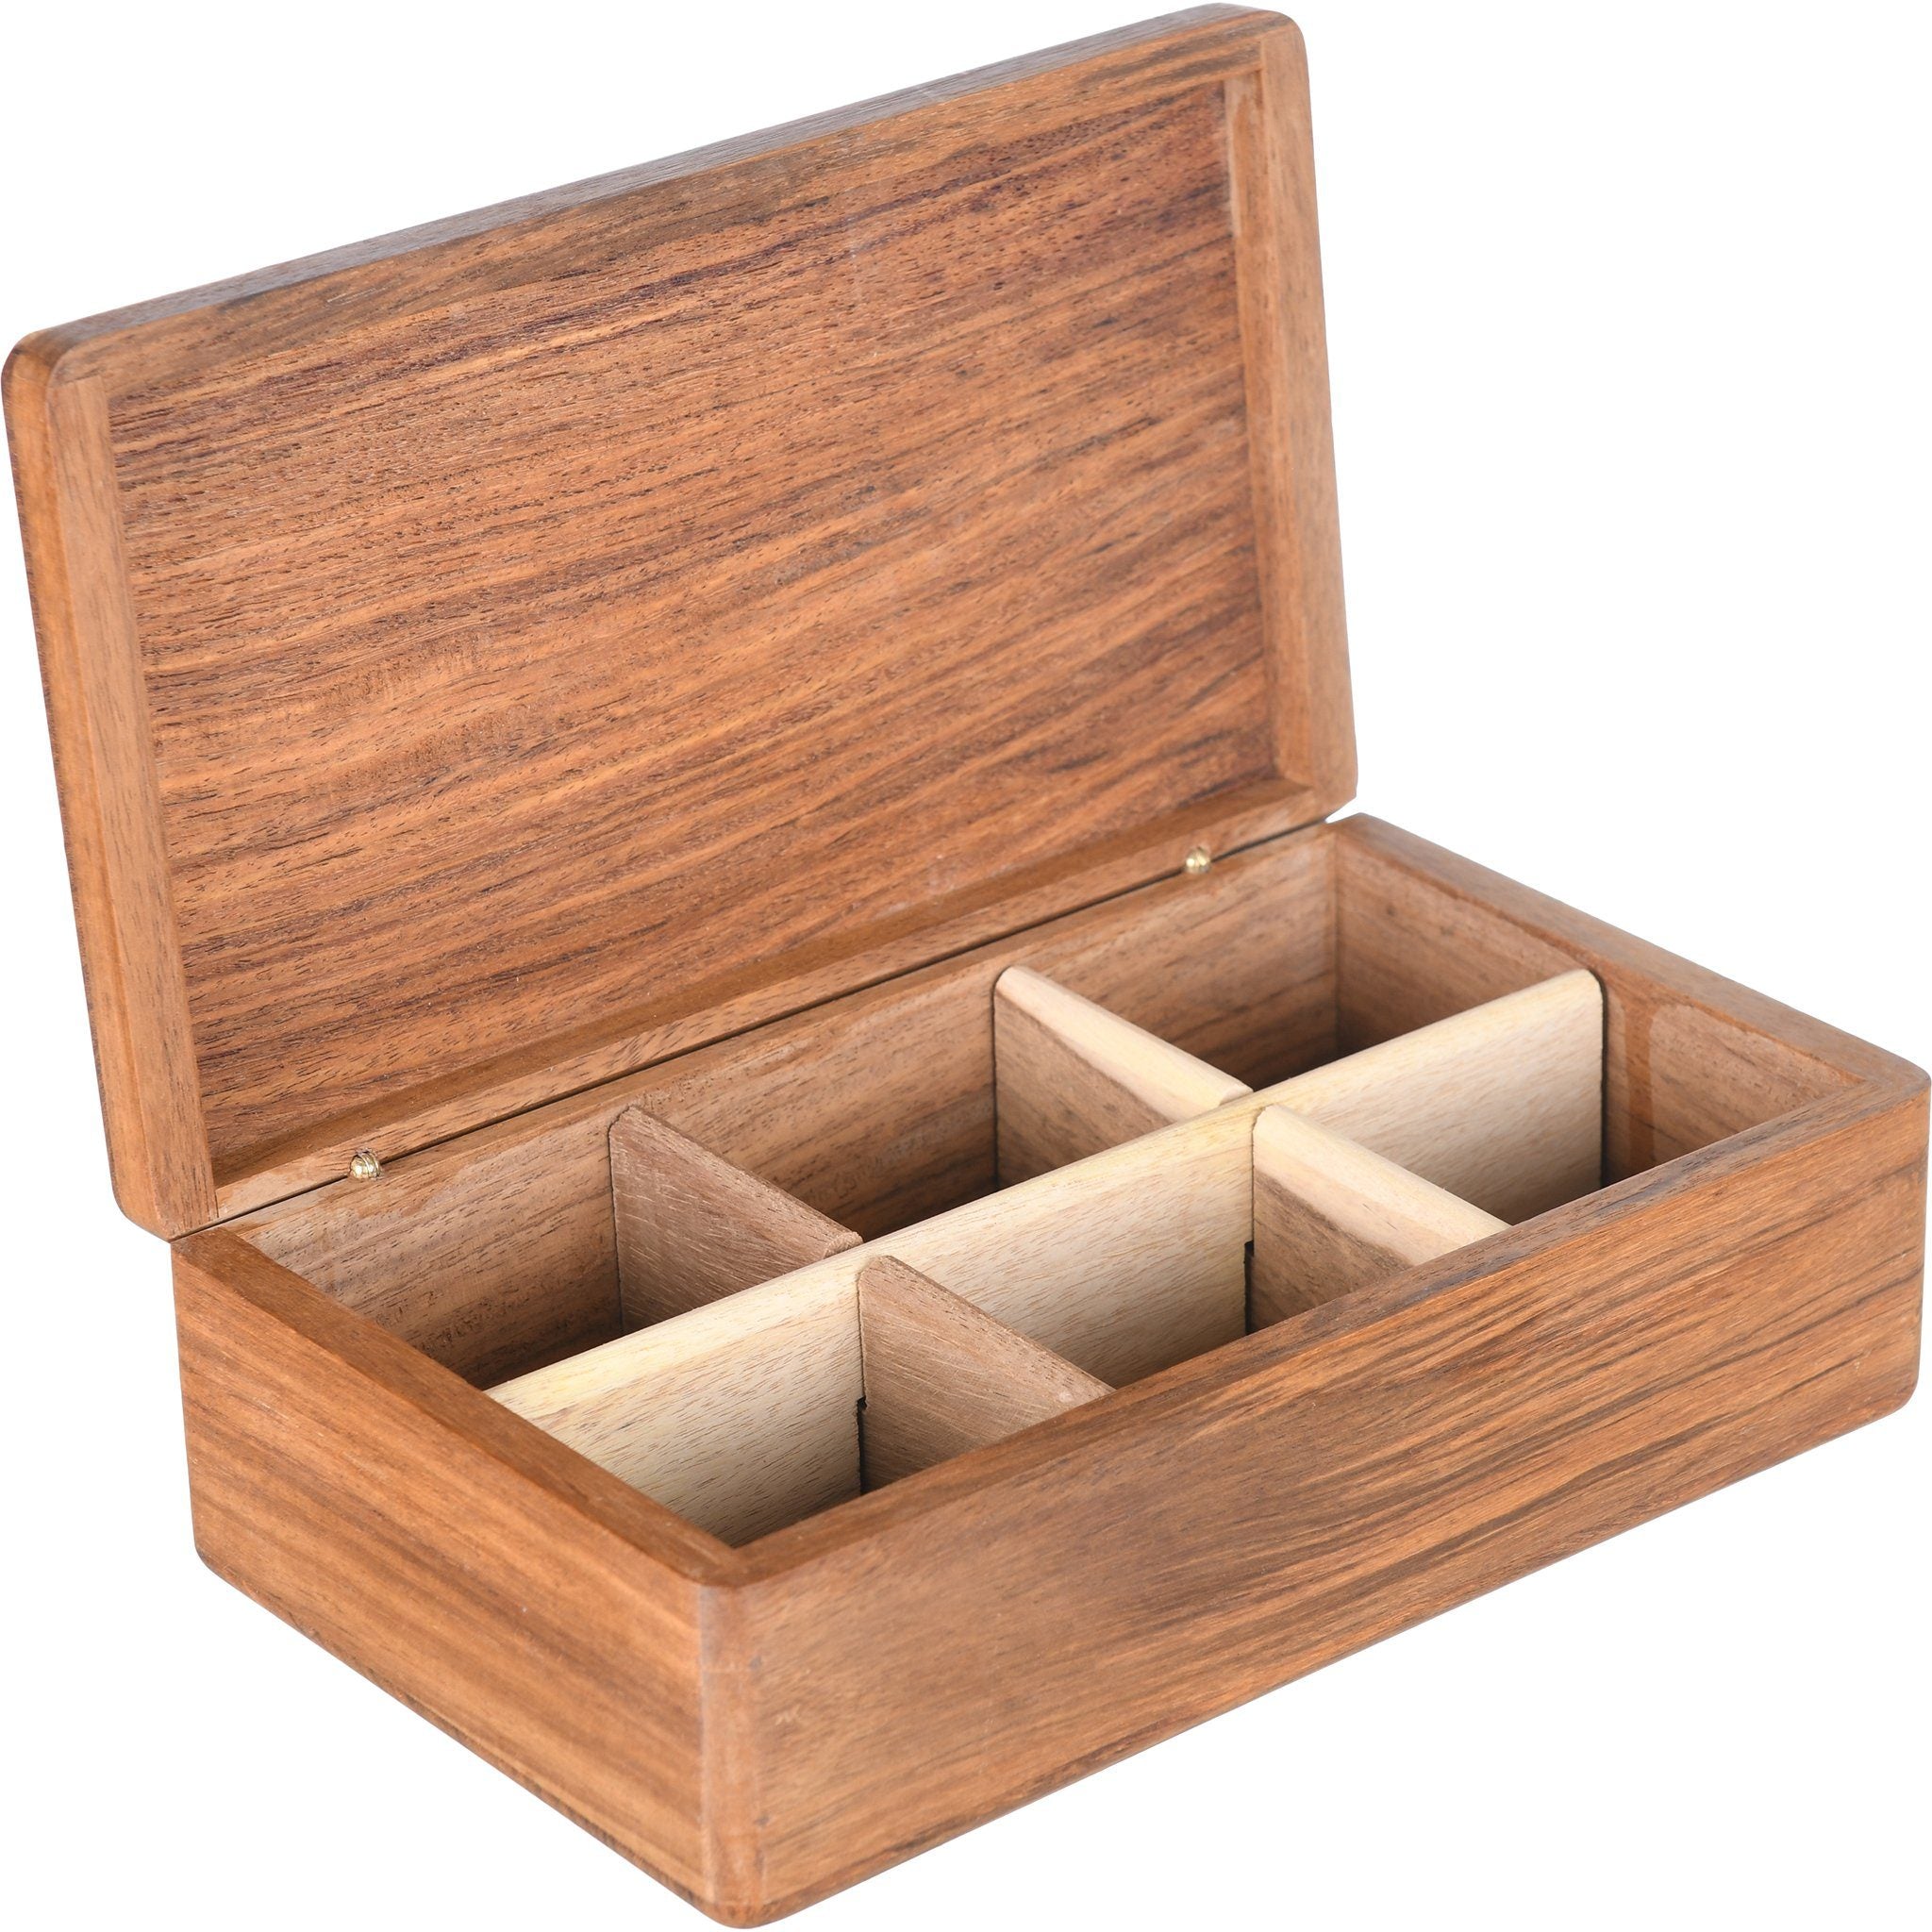 Rectangular Wooden Tea Box - 24x14cm - 590007